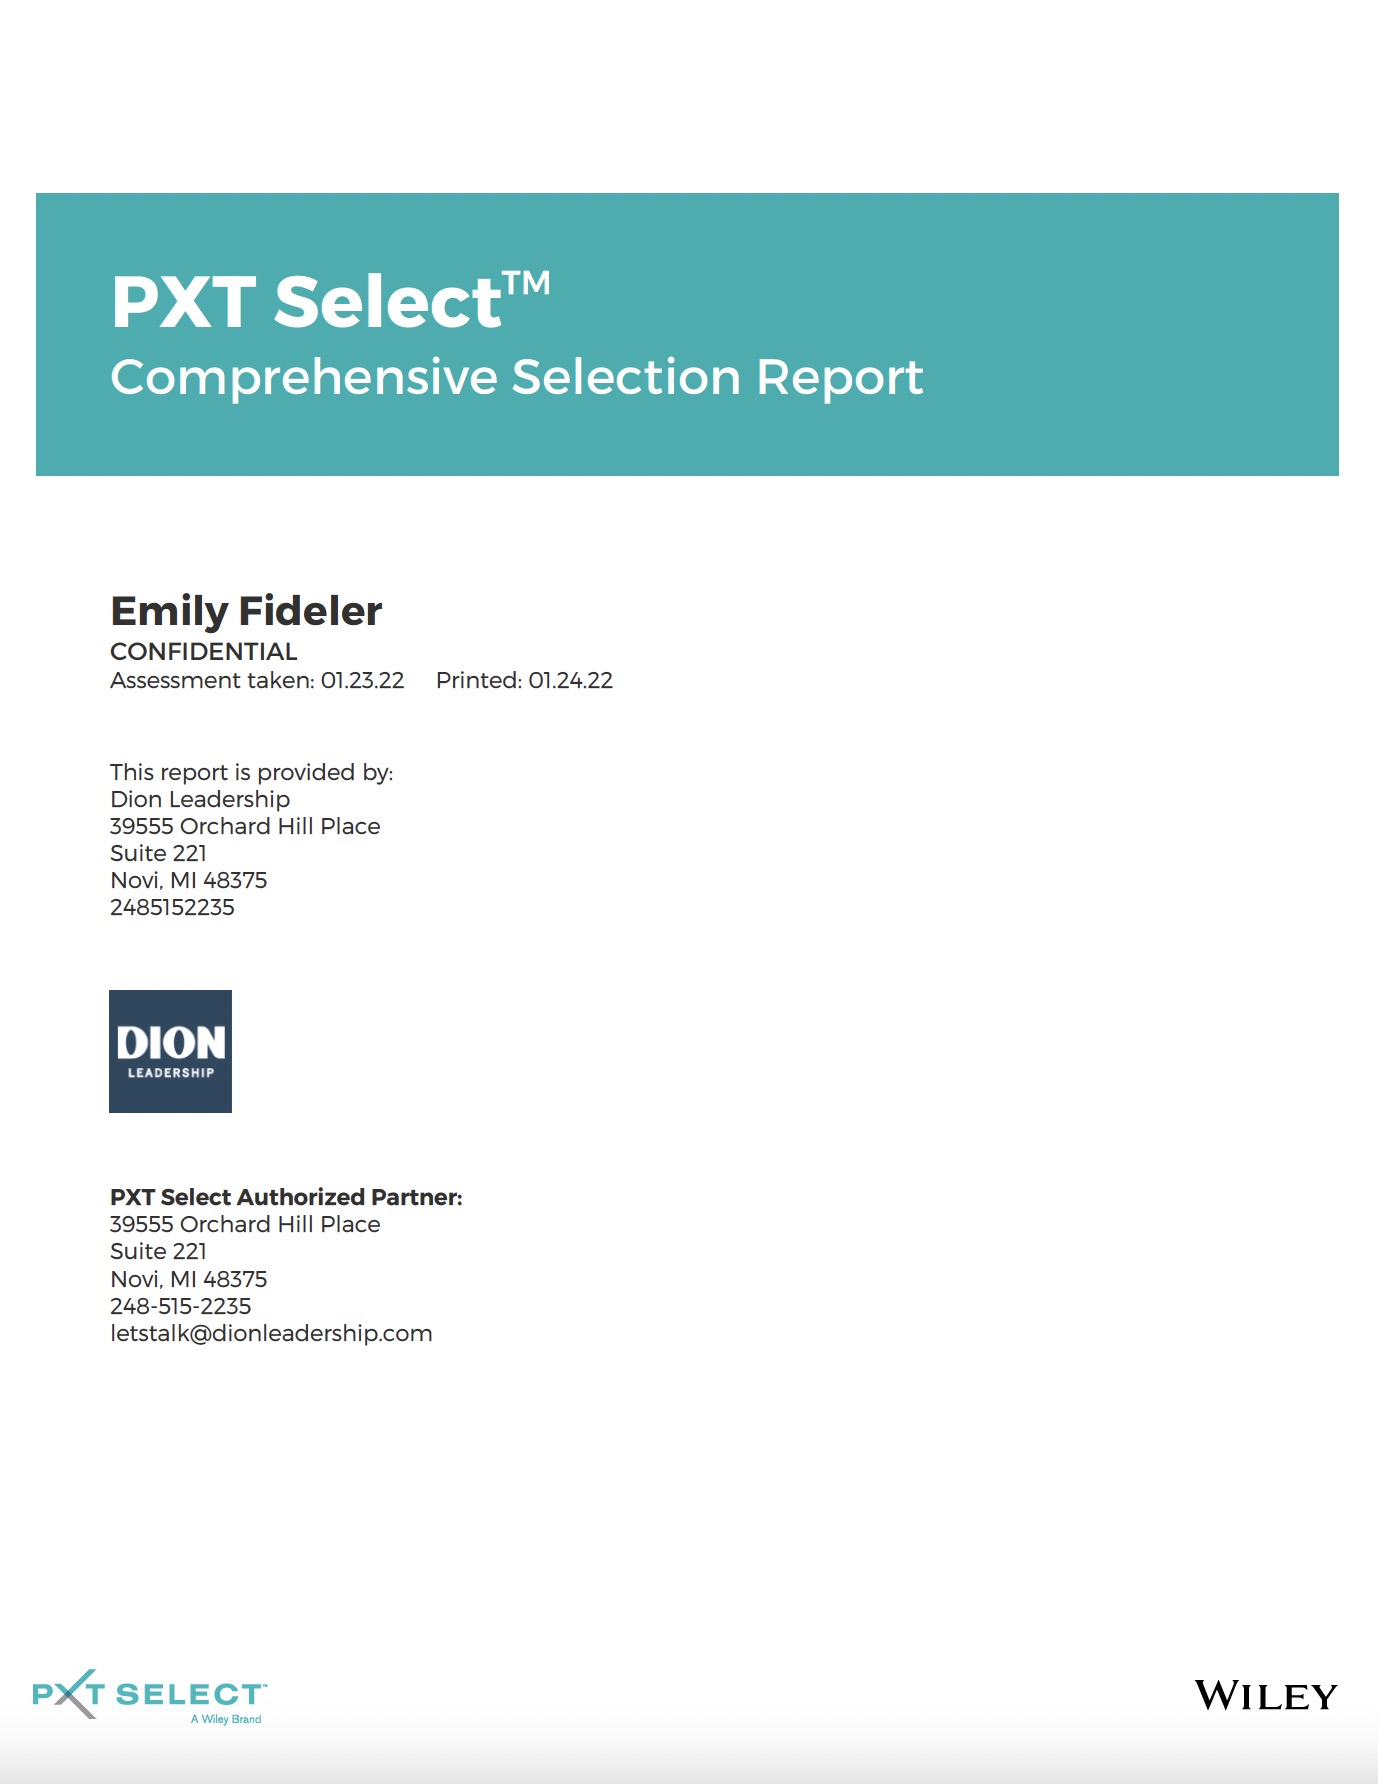 PXT Select Comprehensive Selection Report